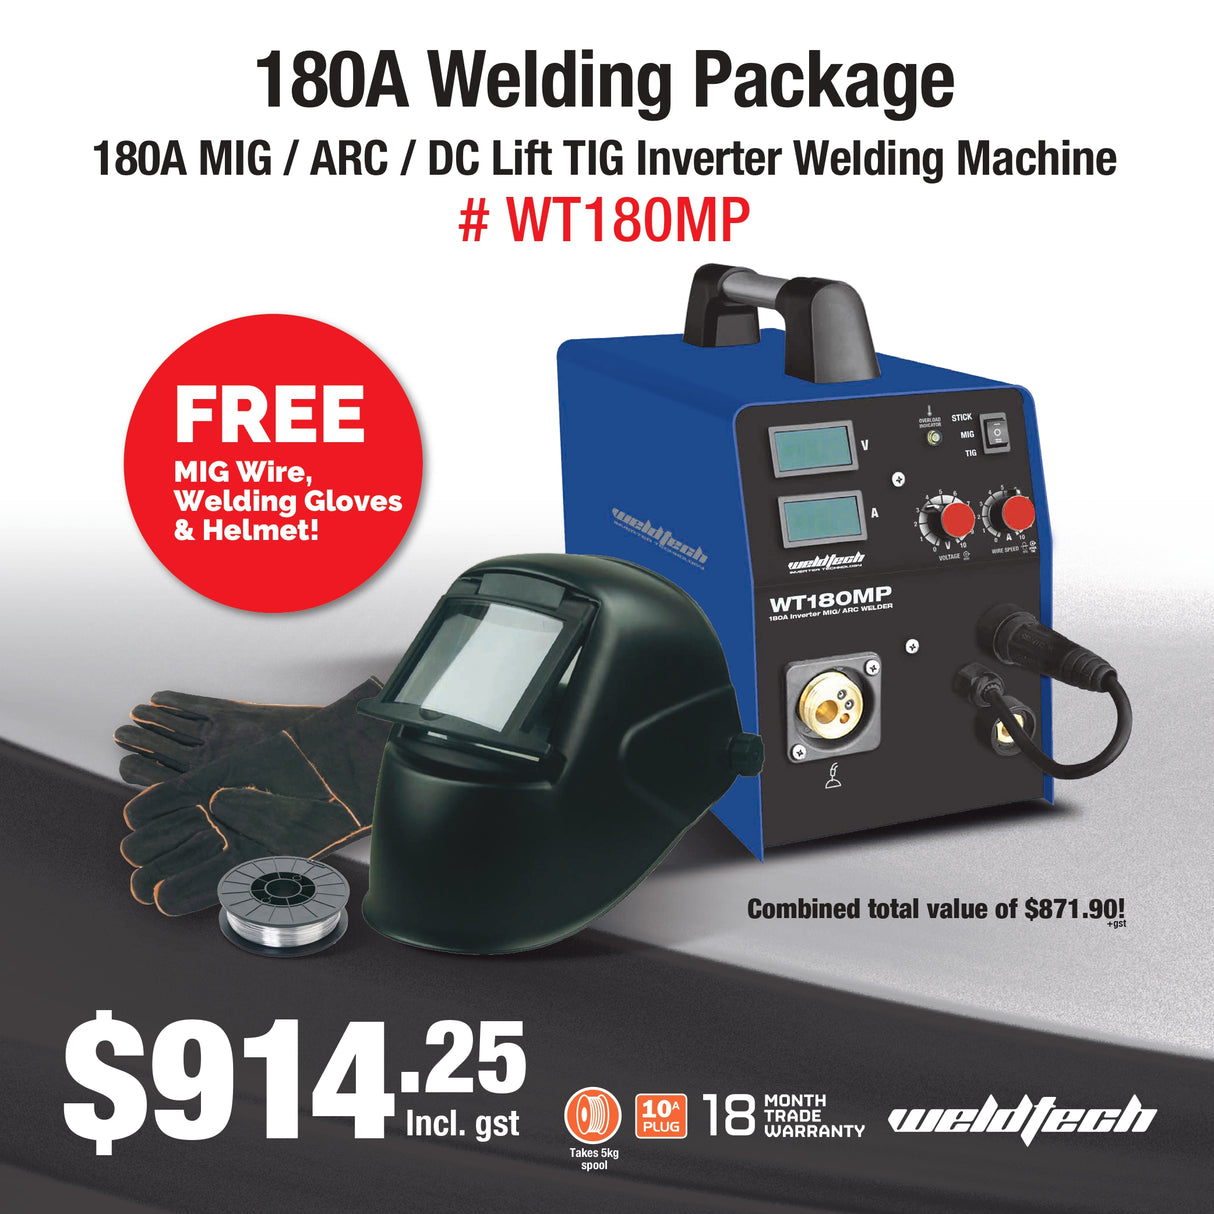 180A WeldTech Multi-Process Inverter MIG/ARC/TIG Welder - WT180MP - FREE Welding Package